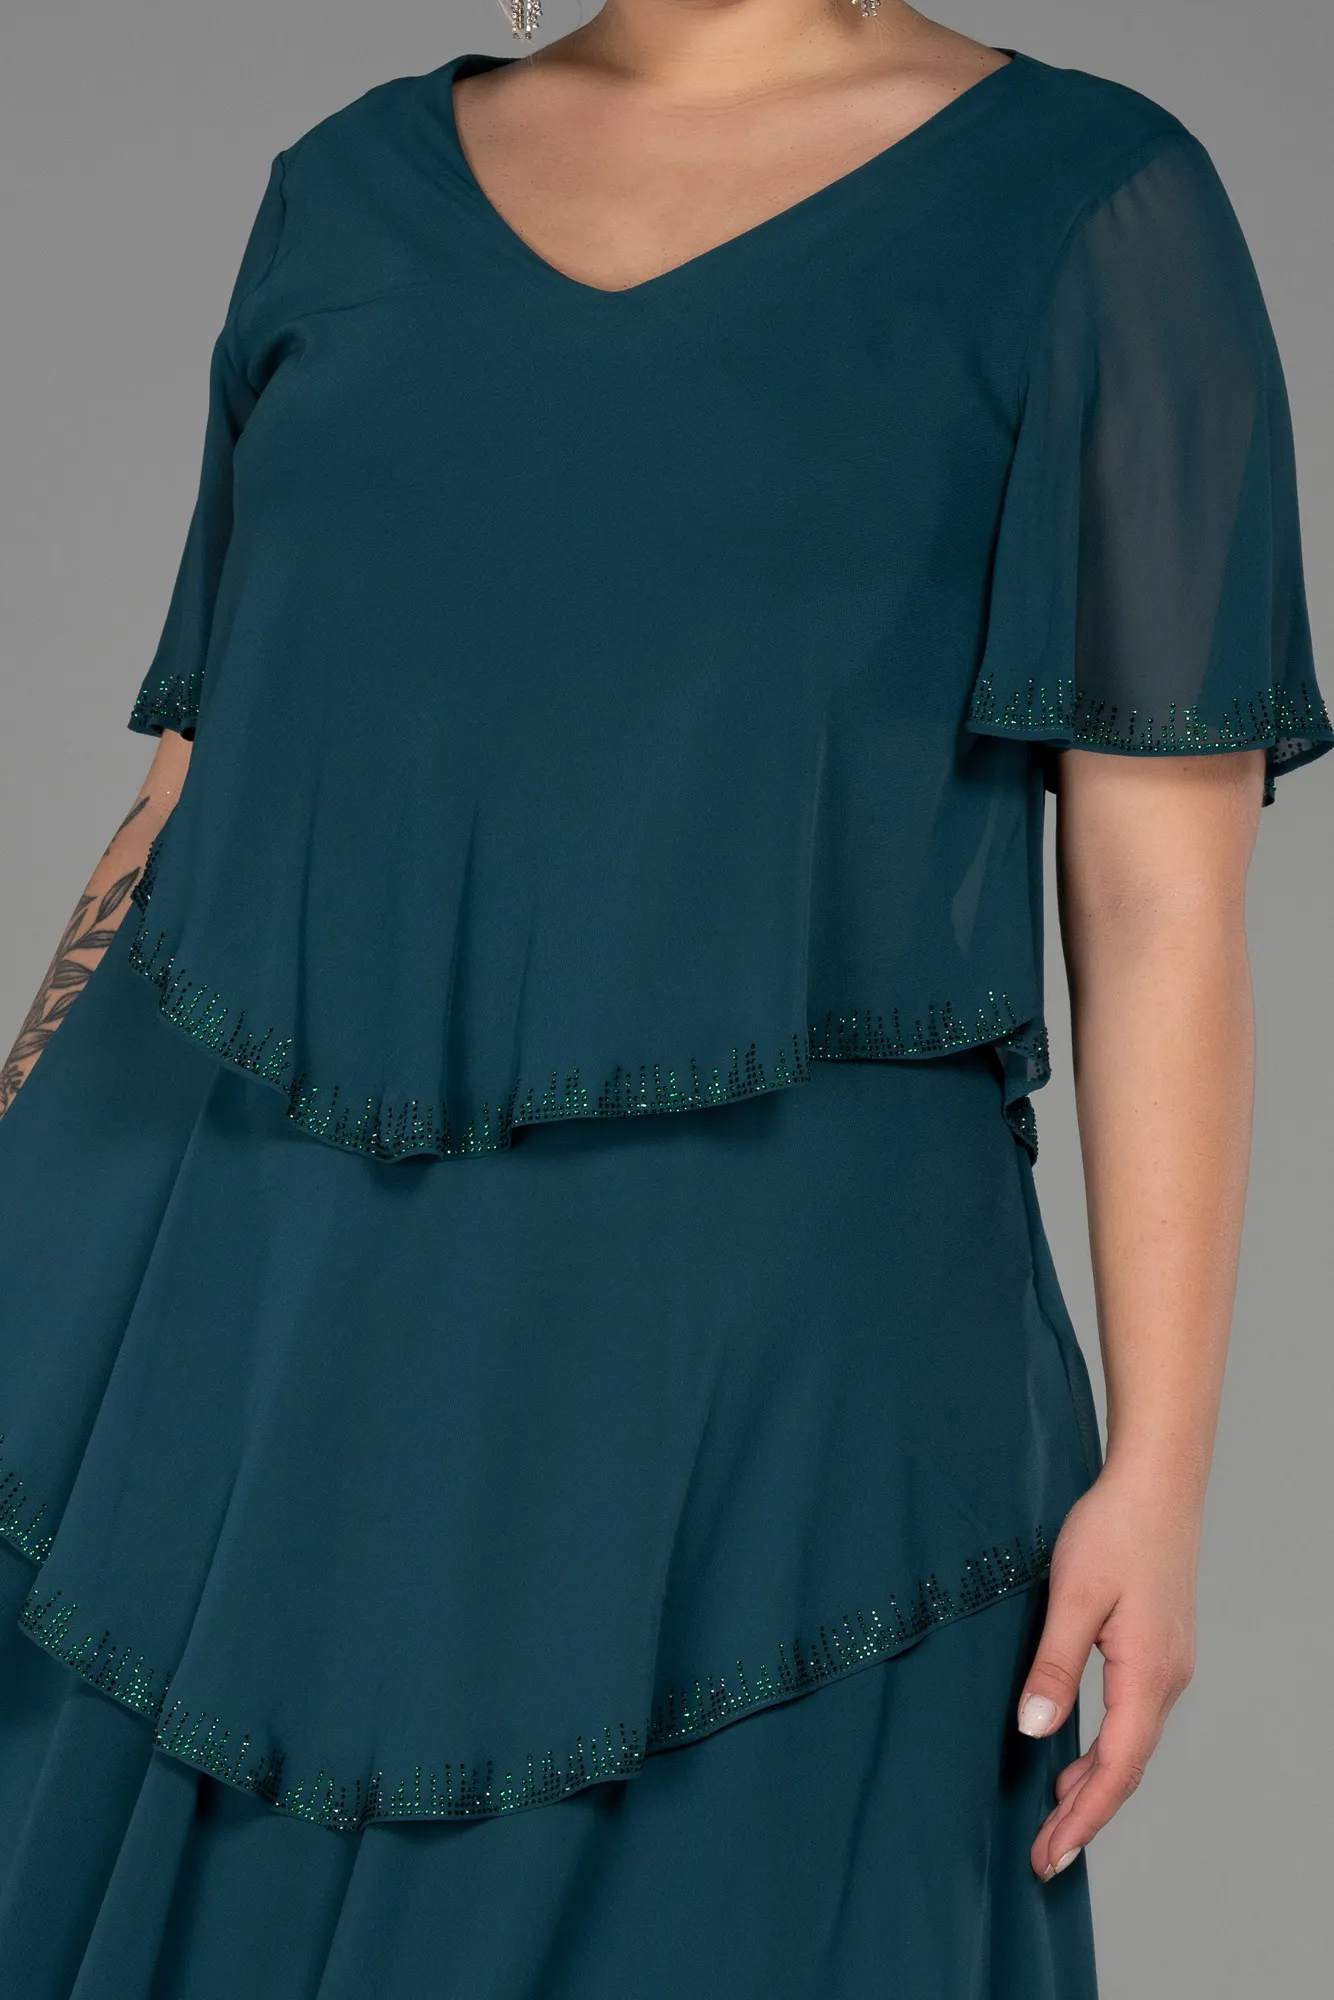 Emerald Green-Midi Chiffon Plus Size Evening Dress ABK1825